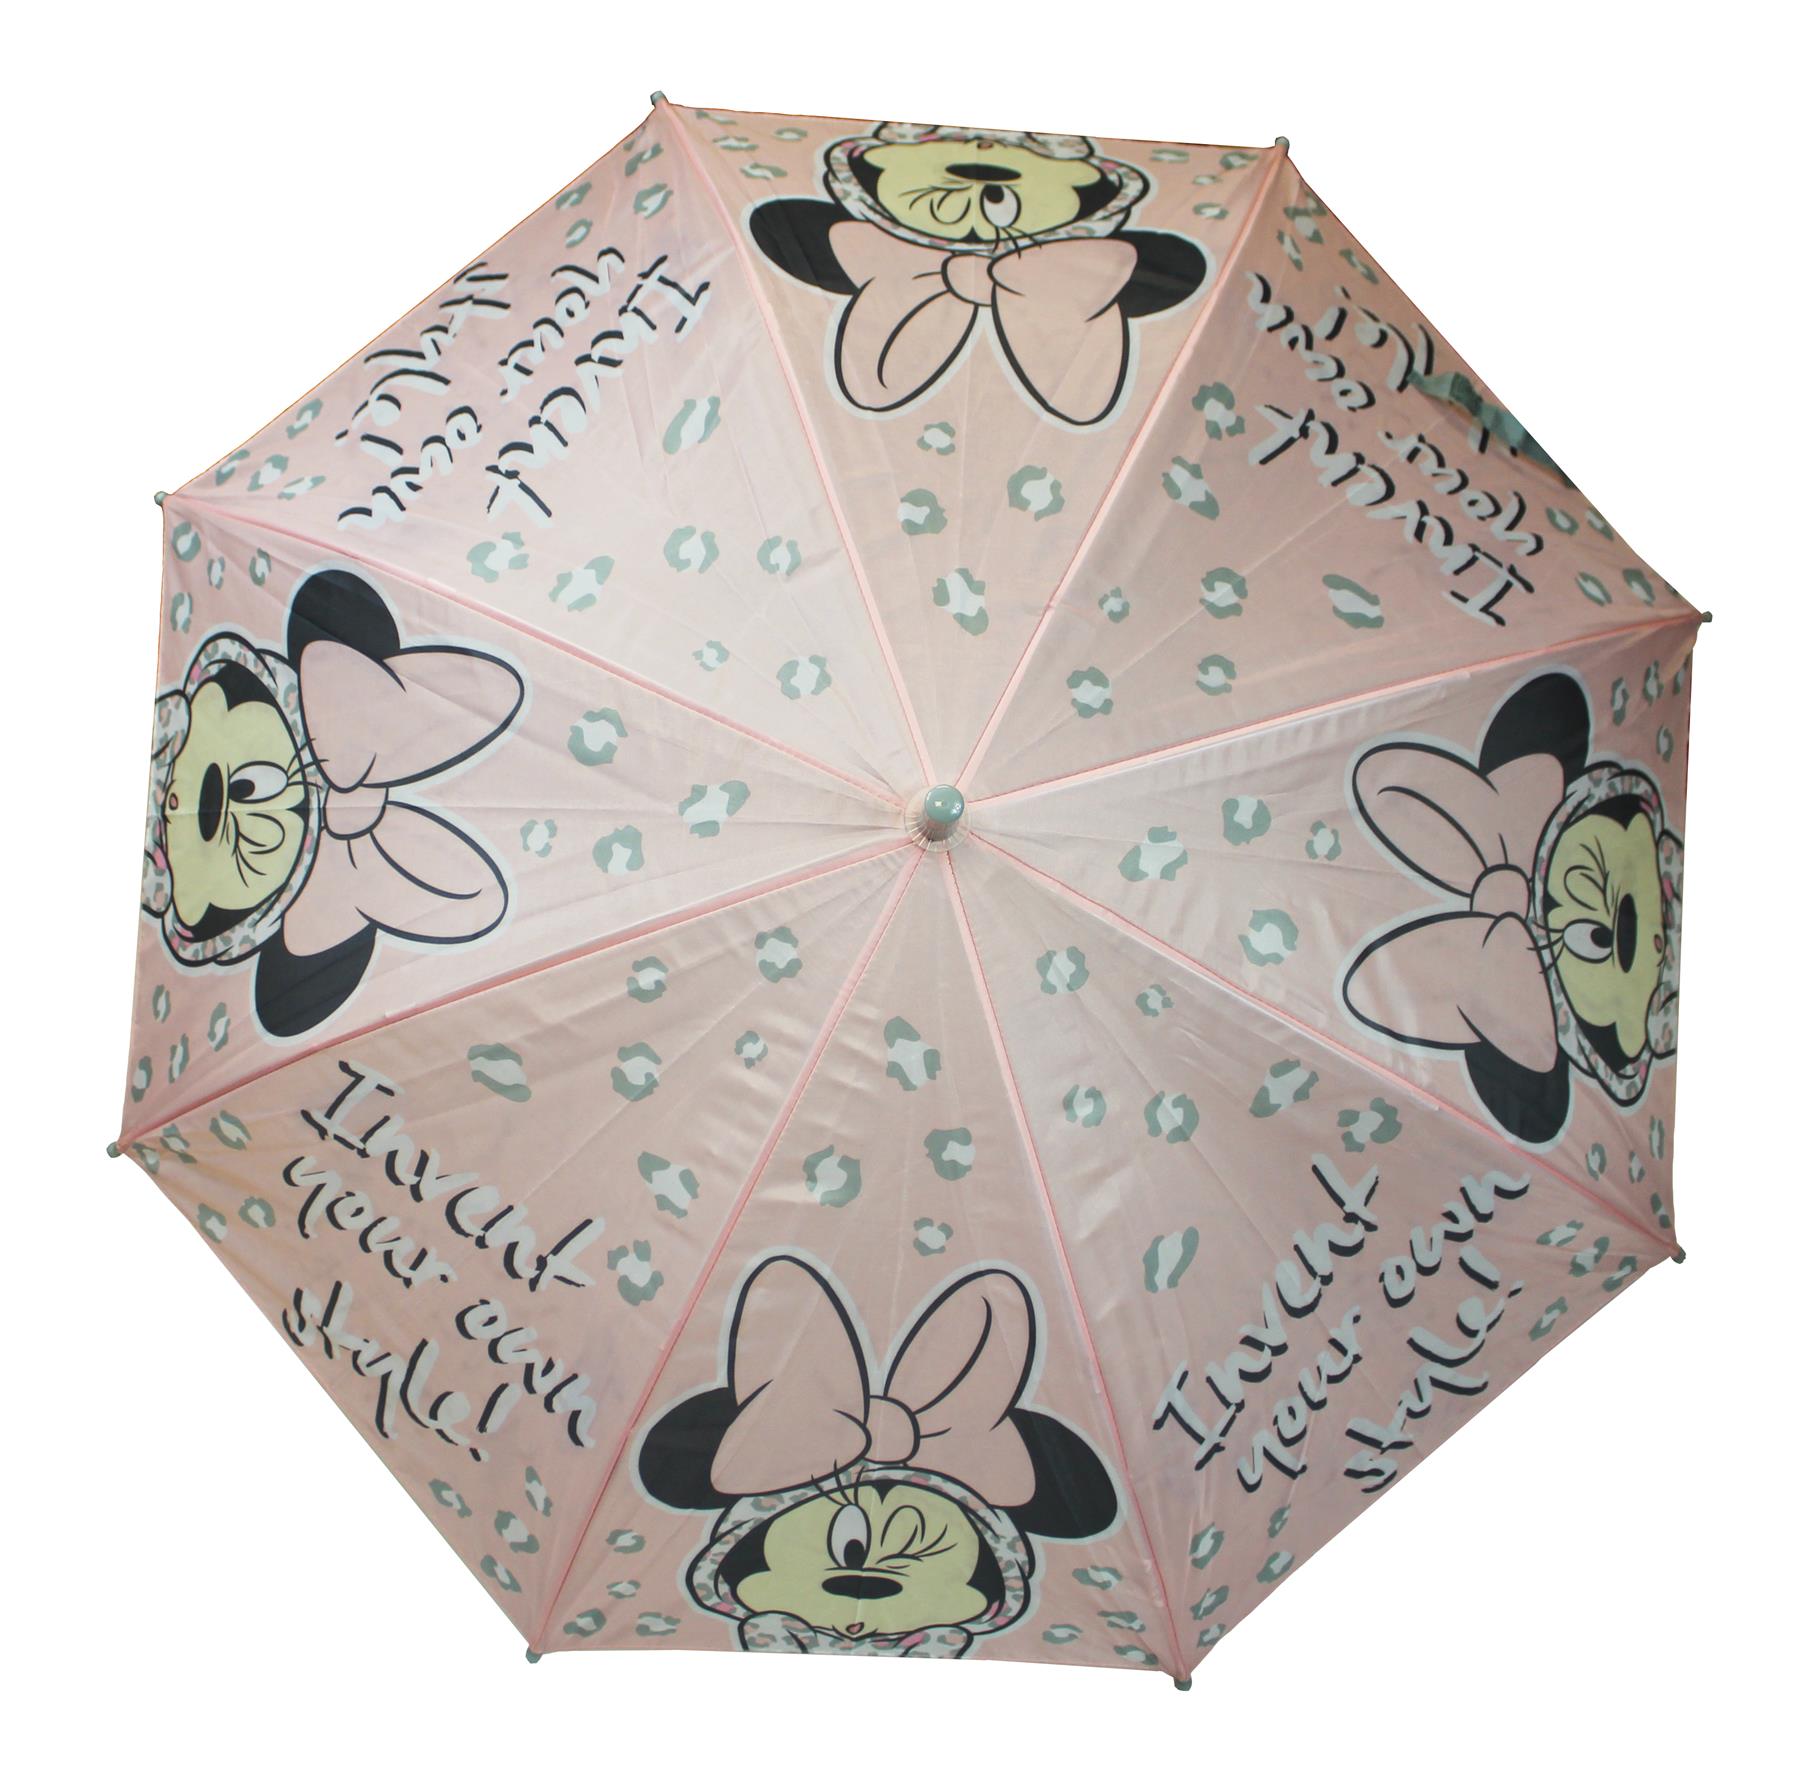 Girls Disney Minnie Mouse POE Embossed Children's Character Dome Designed EVA transparent Stick Umbrella